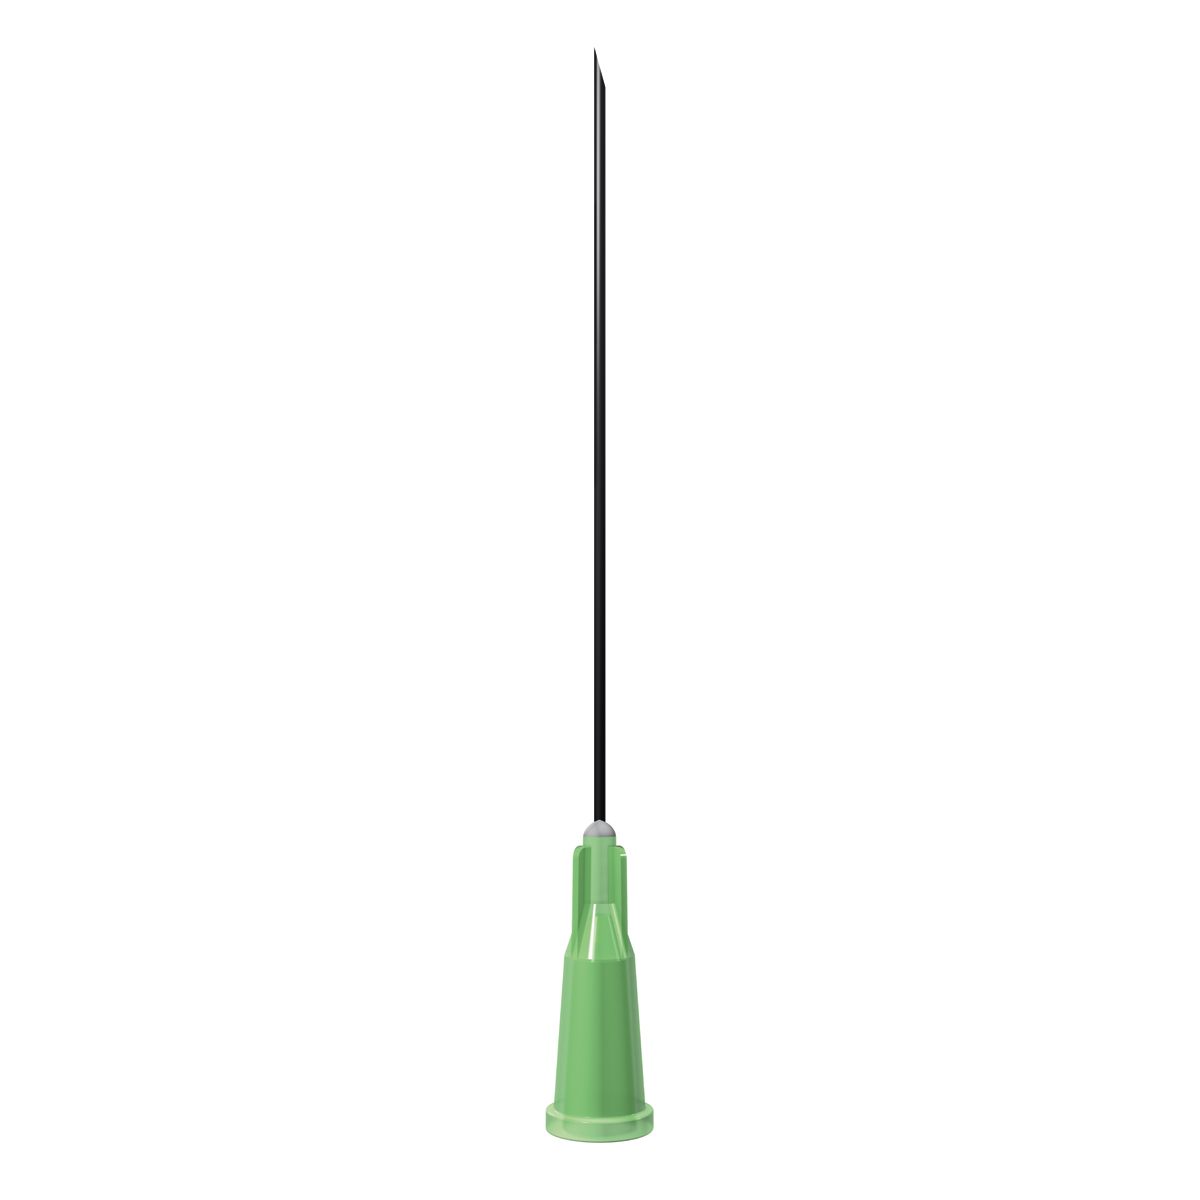 Long Green 21G 50mm (2 inch) needle